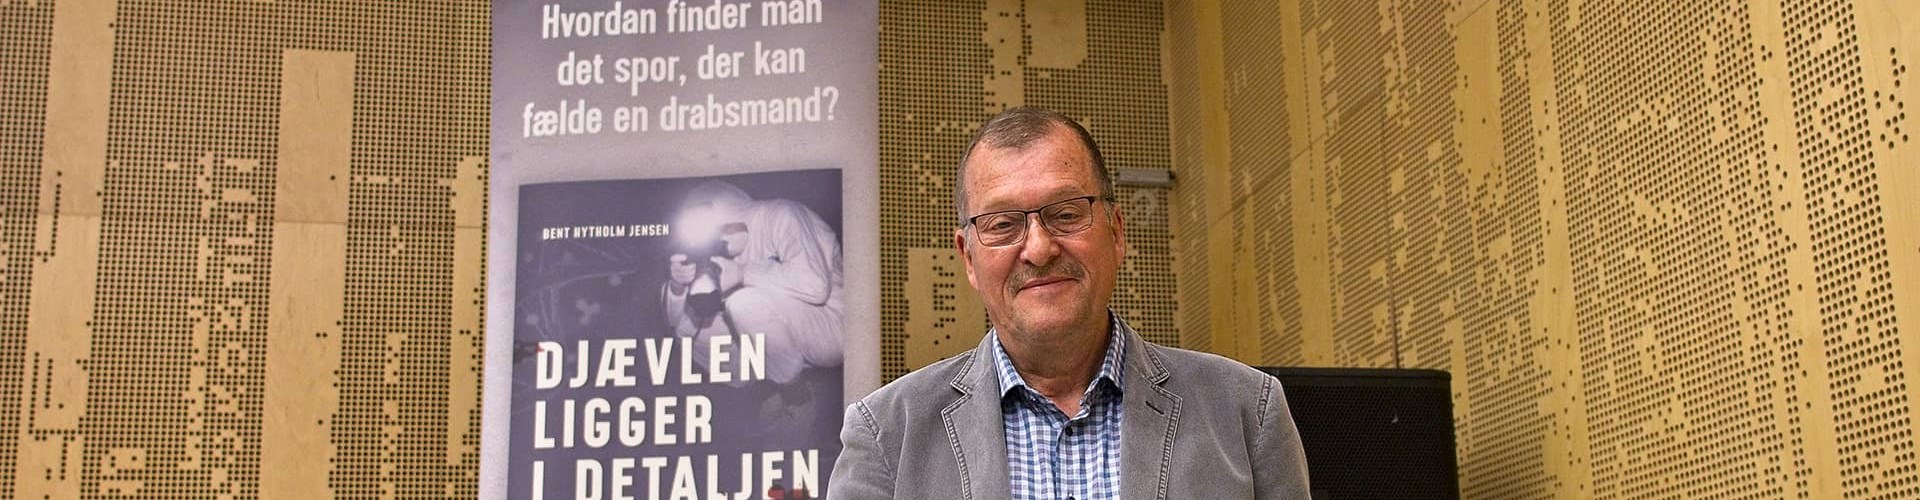 Bent Hytholm Jensen | FOF Aarhus | Foredrag